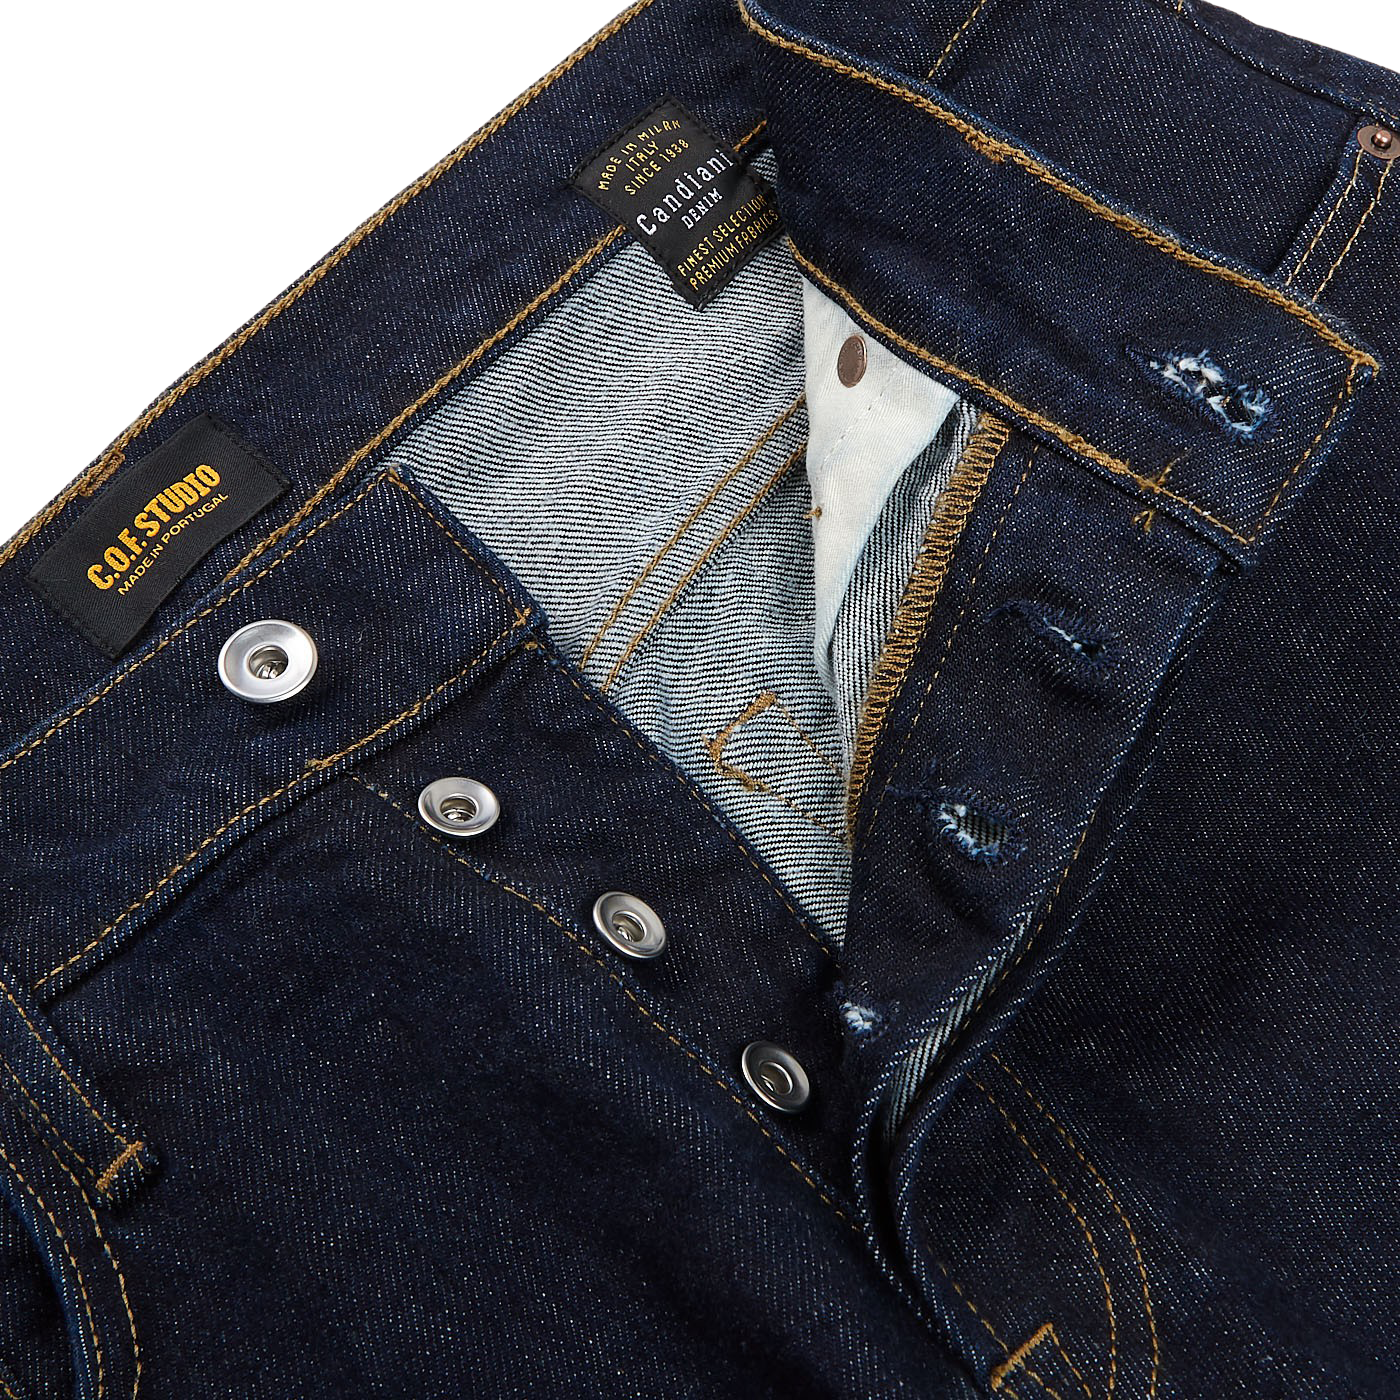 C.O.F Studio Blue Rinsed Organic Candiani Cotton M7 Jeans Zipper